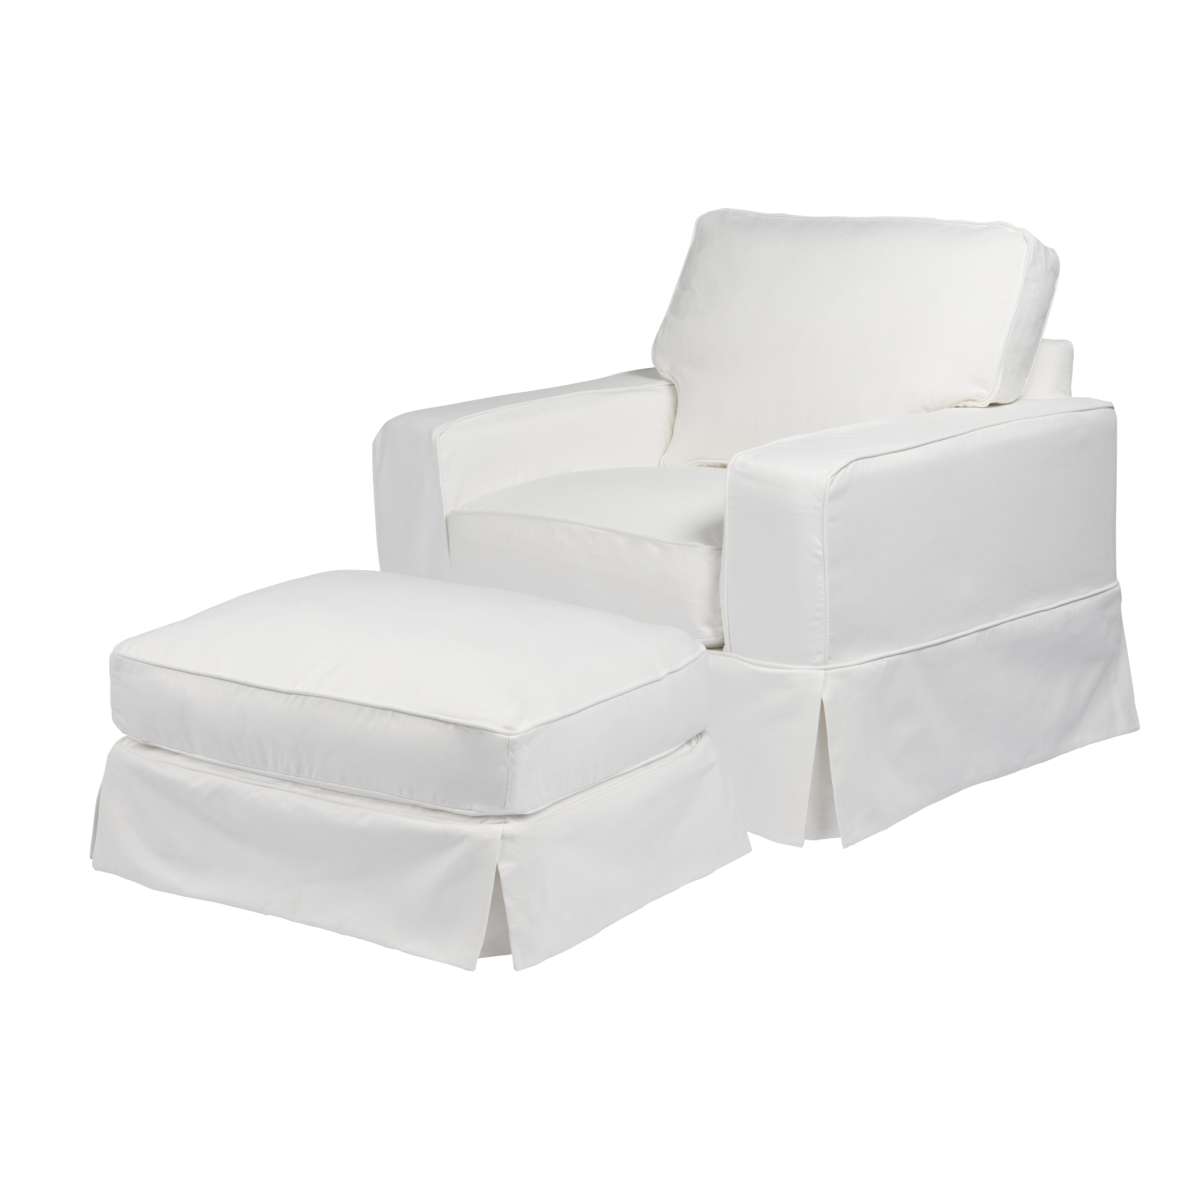 Su-108520-30-391081 Americana Slipcovered Chair & Ottoman, Performance White